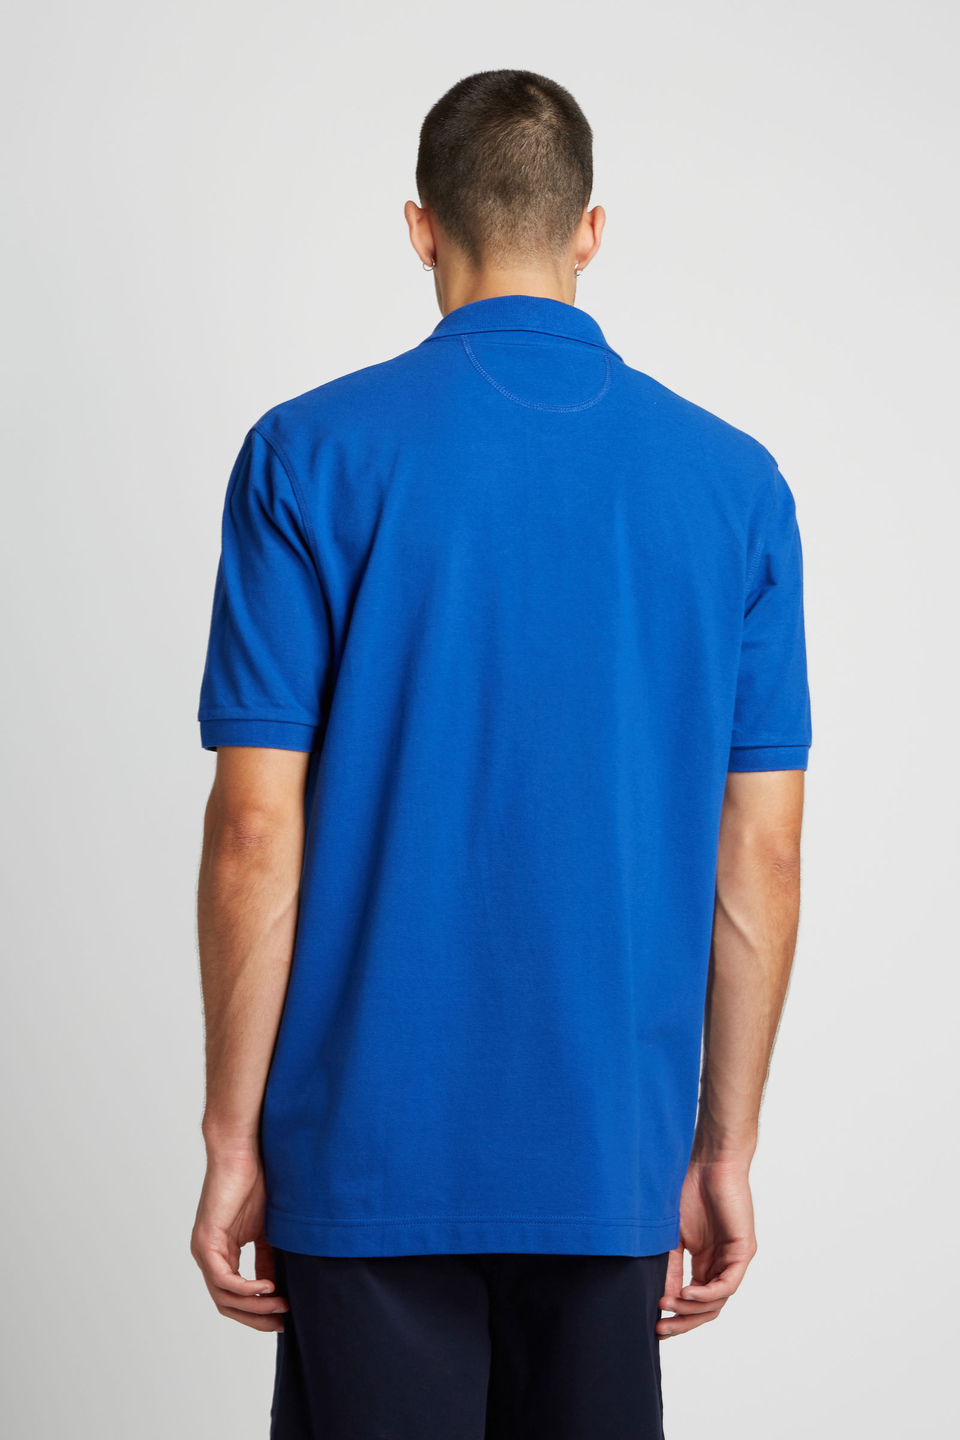 Herren-Poloshirt aus Piqué mit kurzem Arm, oversized Modell - La Martina - Official Online Shop